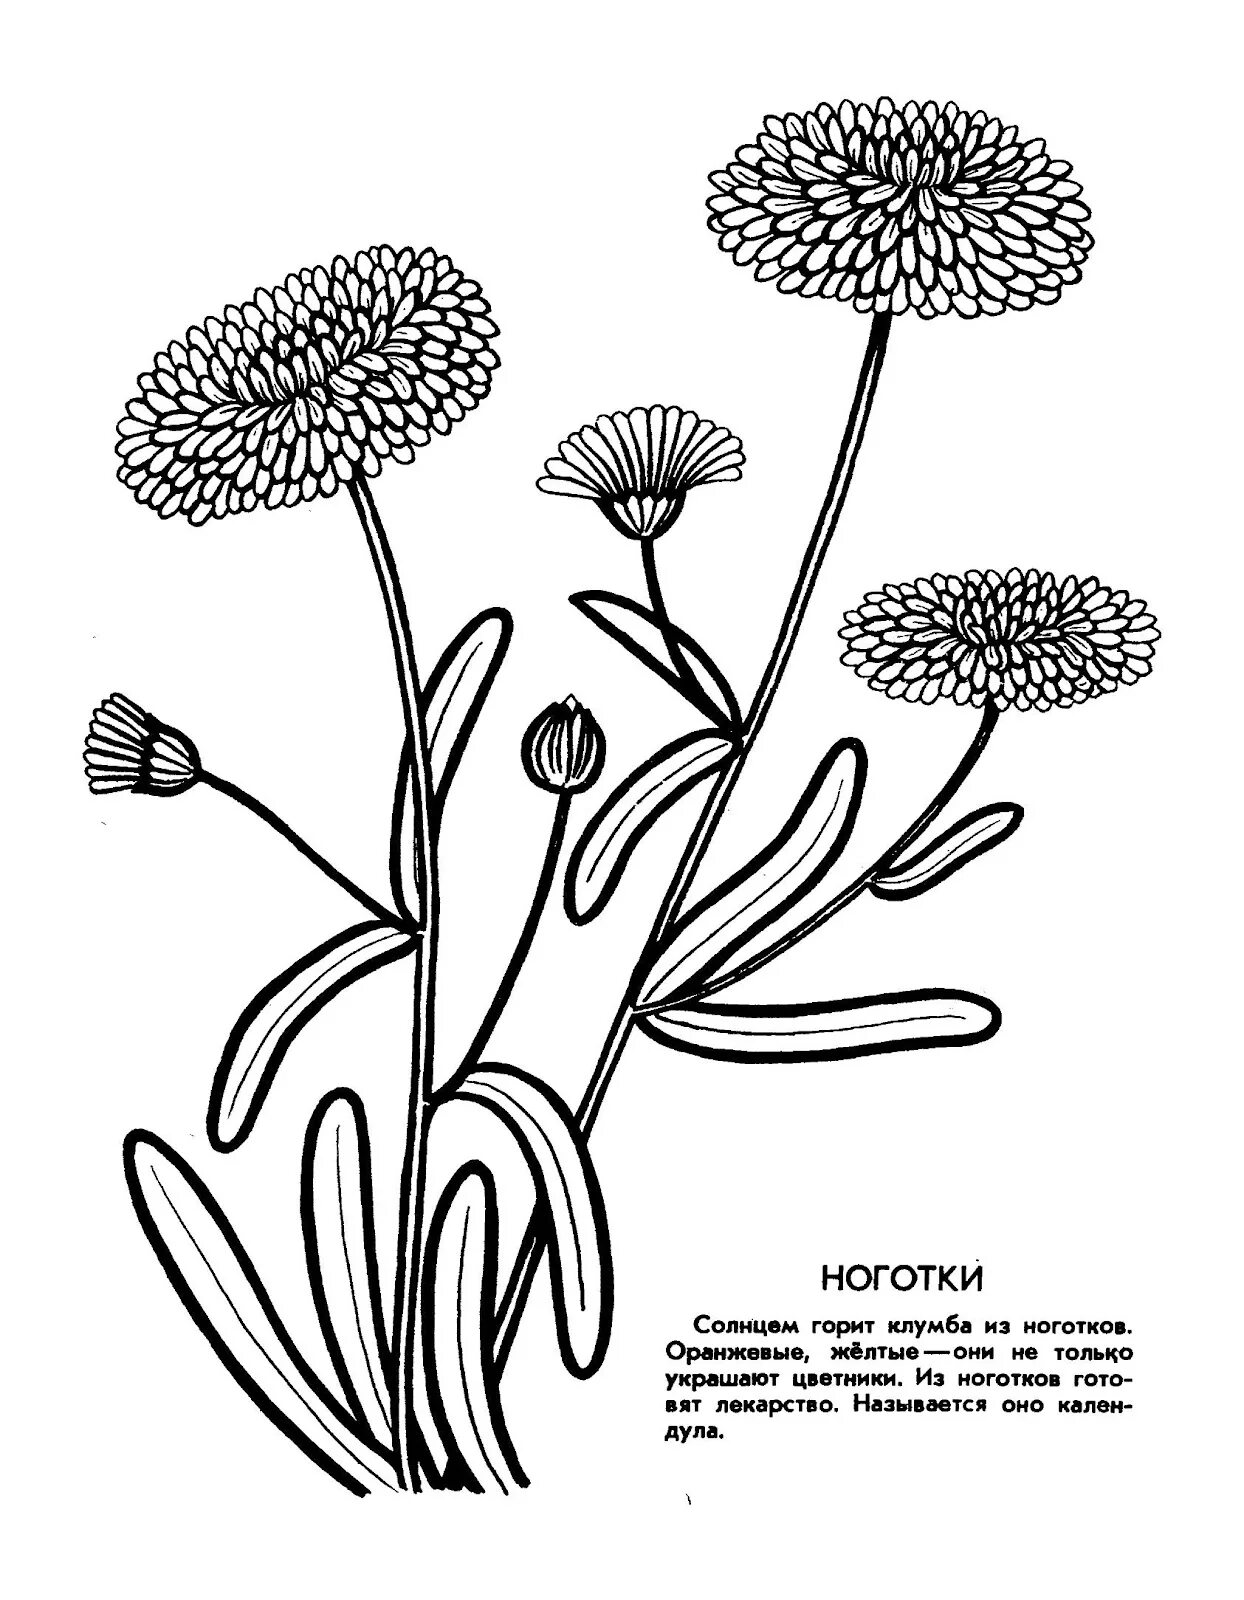 Fancy medicinal plants coloring book for preschoolers